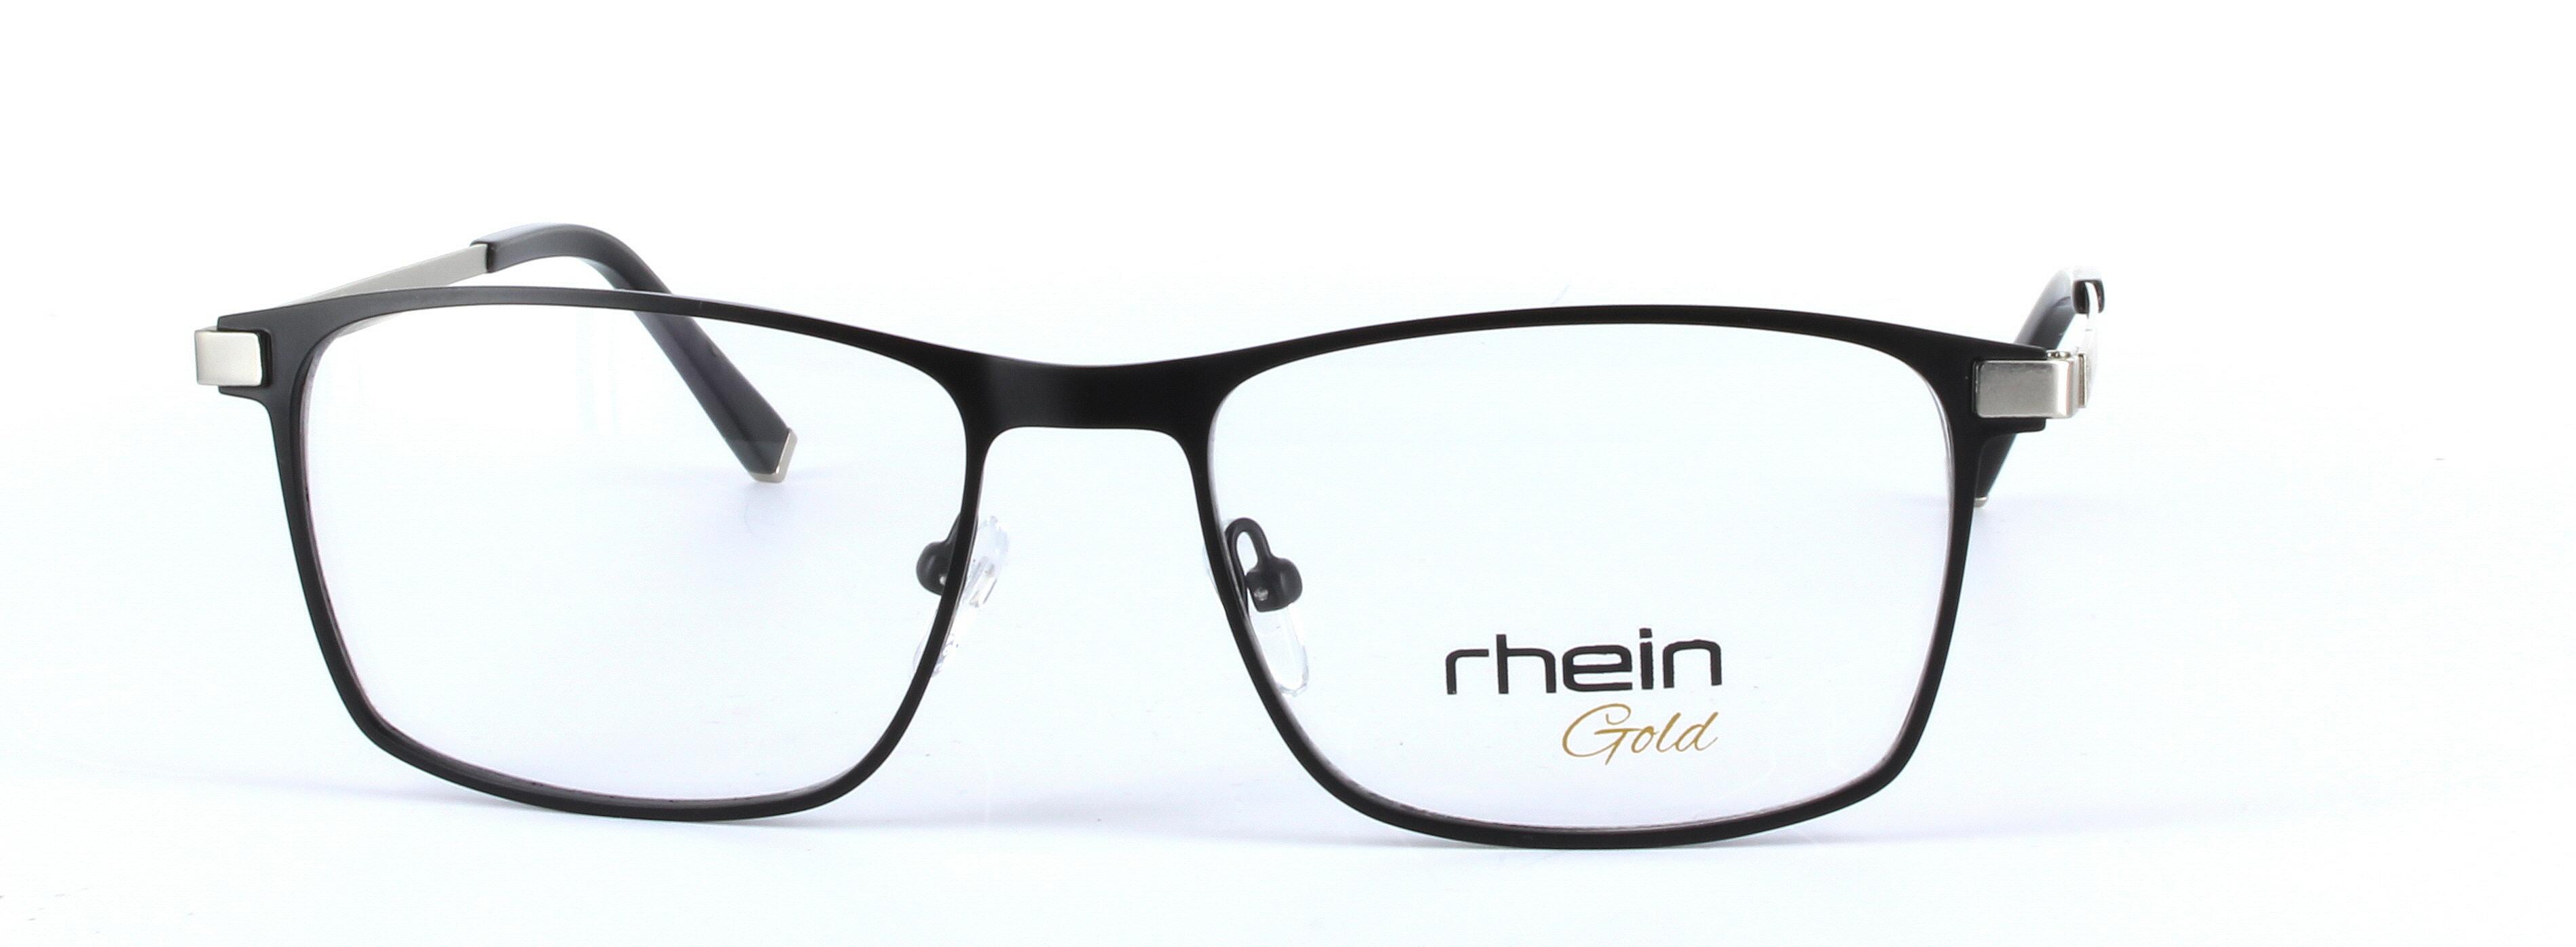 Adam Black Oval Rectangular Metal Glasses - Image View 5